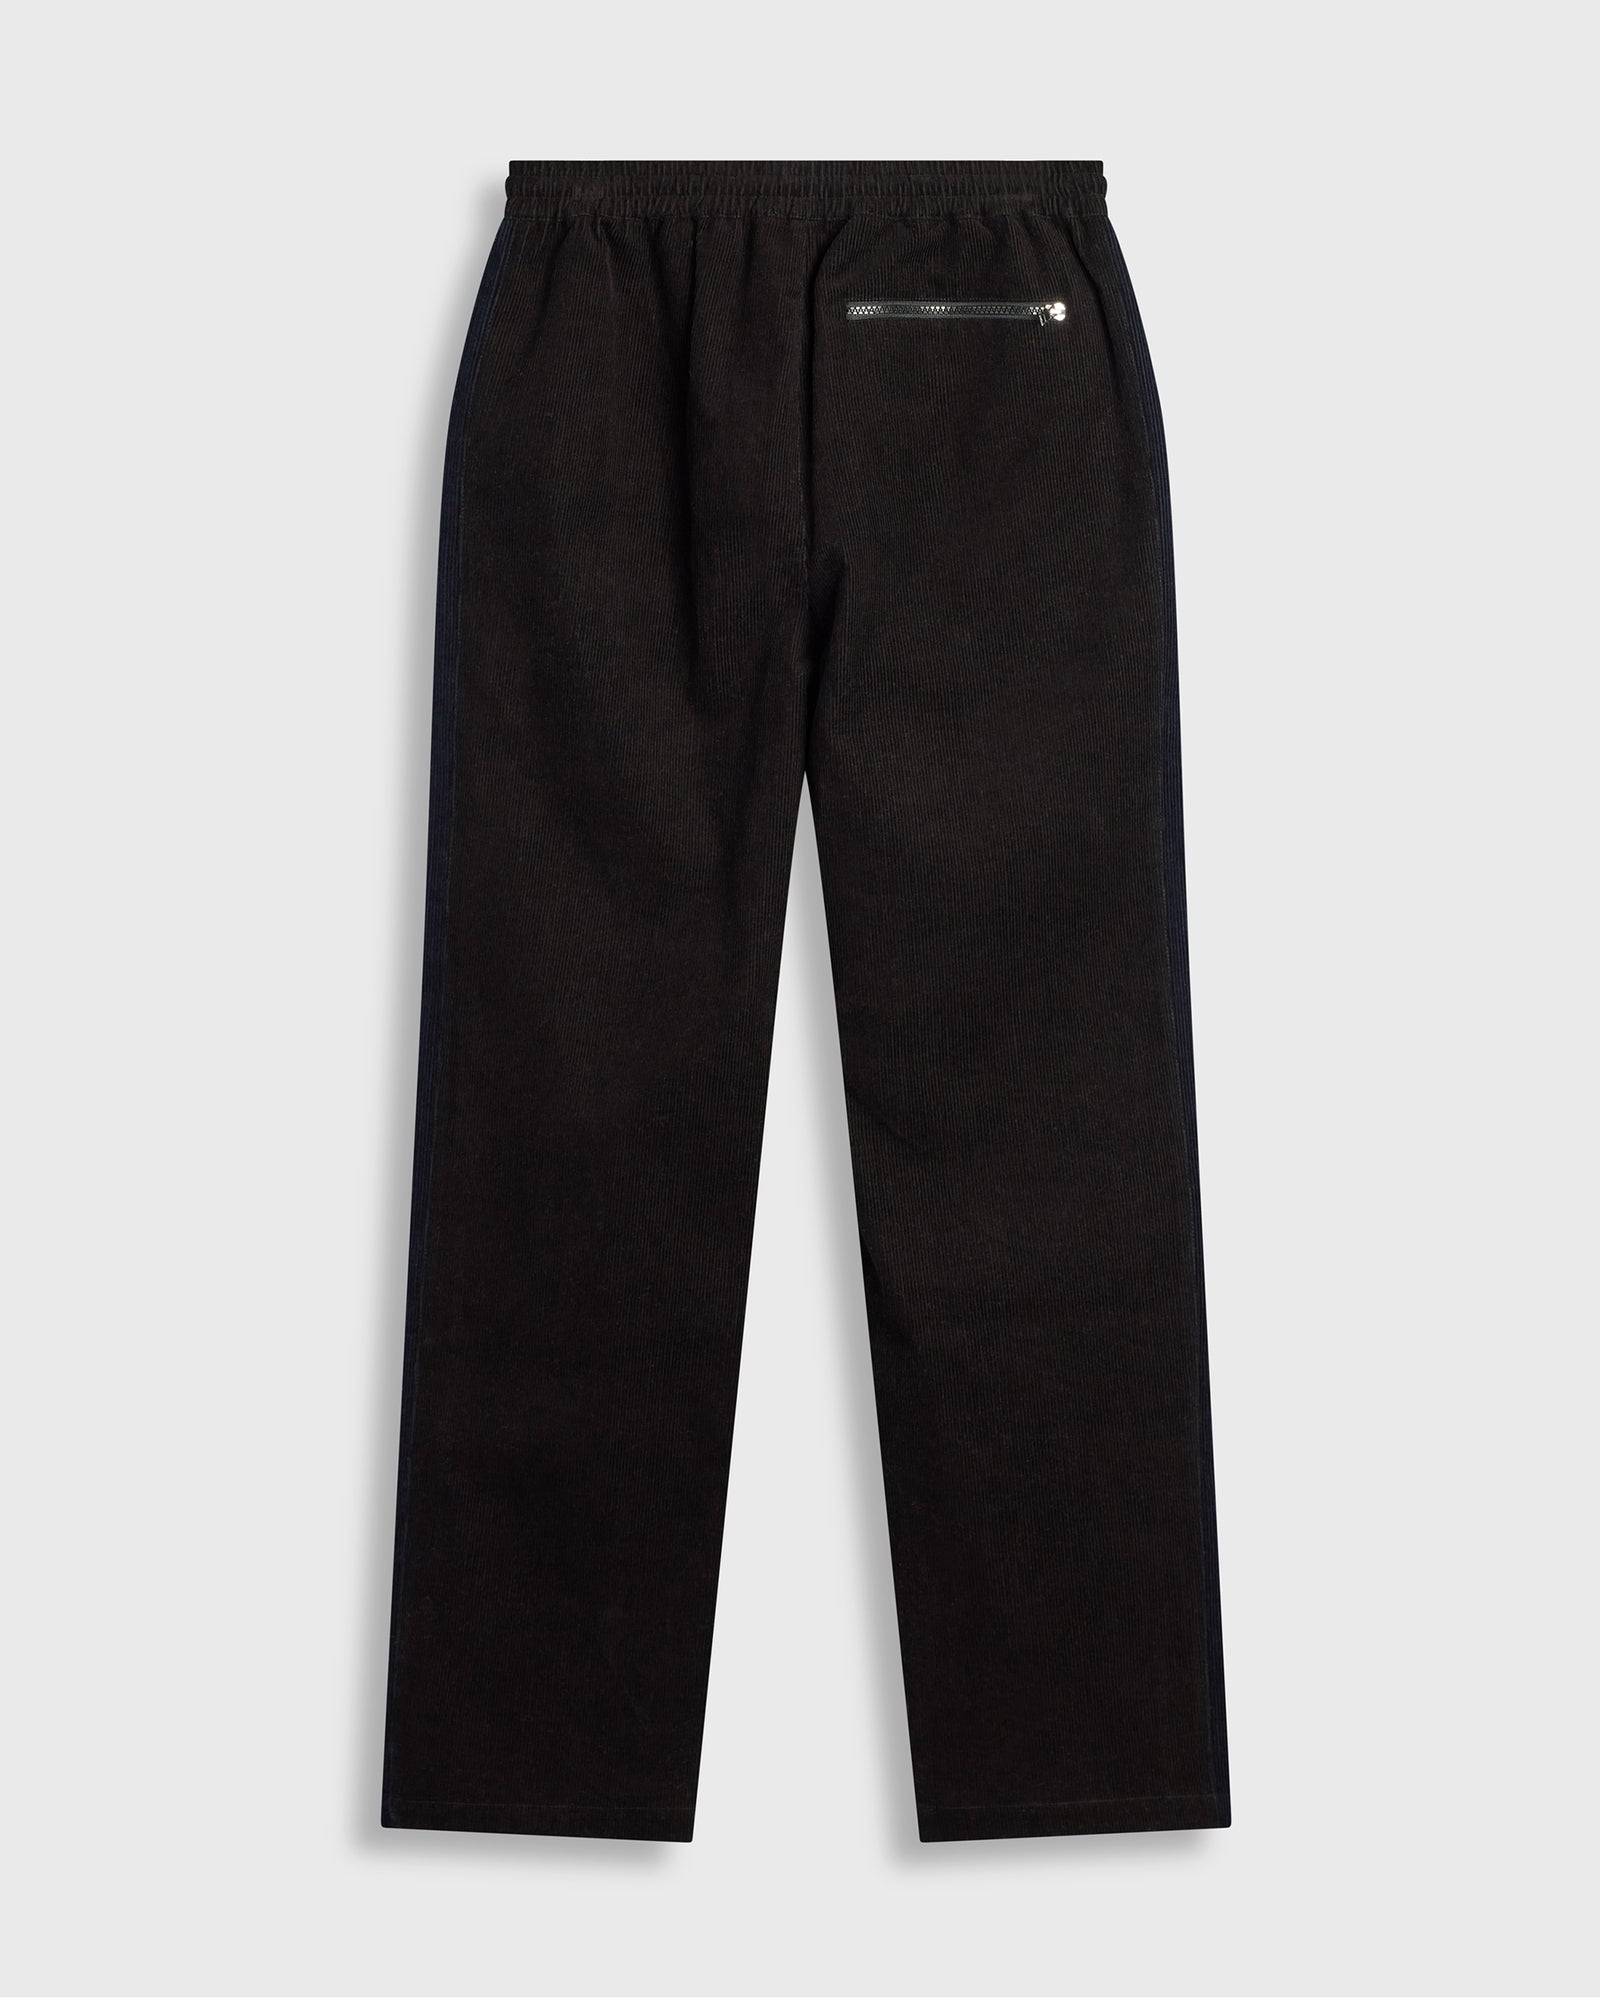 Black Corduroy Pants Straight Leg - unisex for men & women fashion pant by Krost